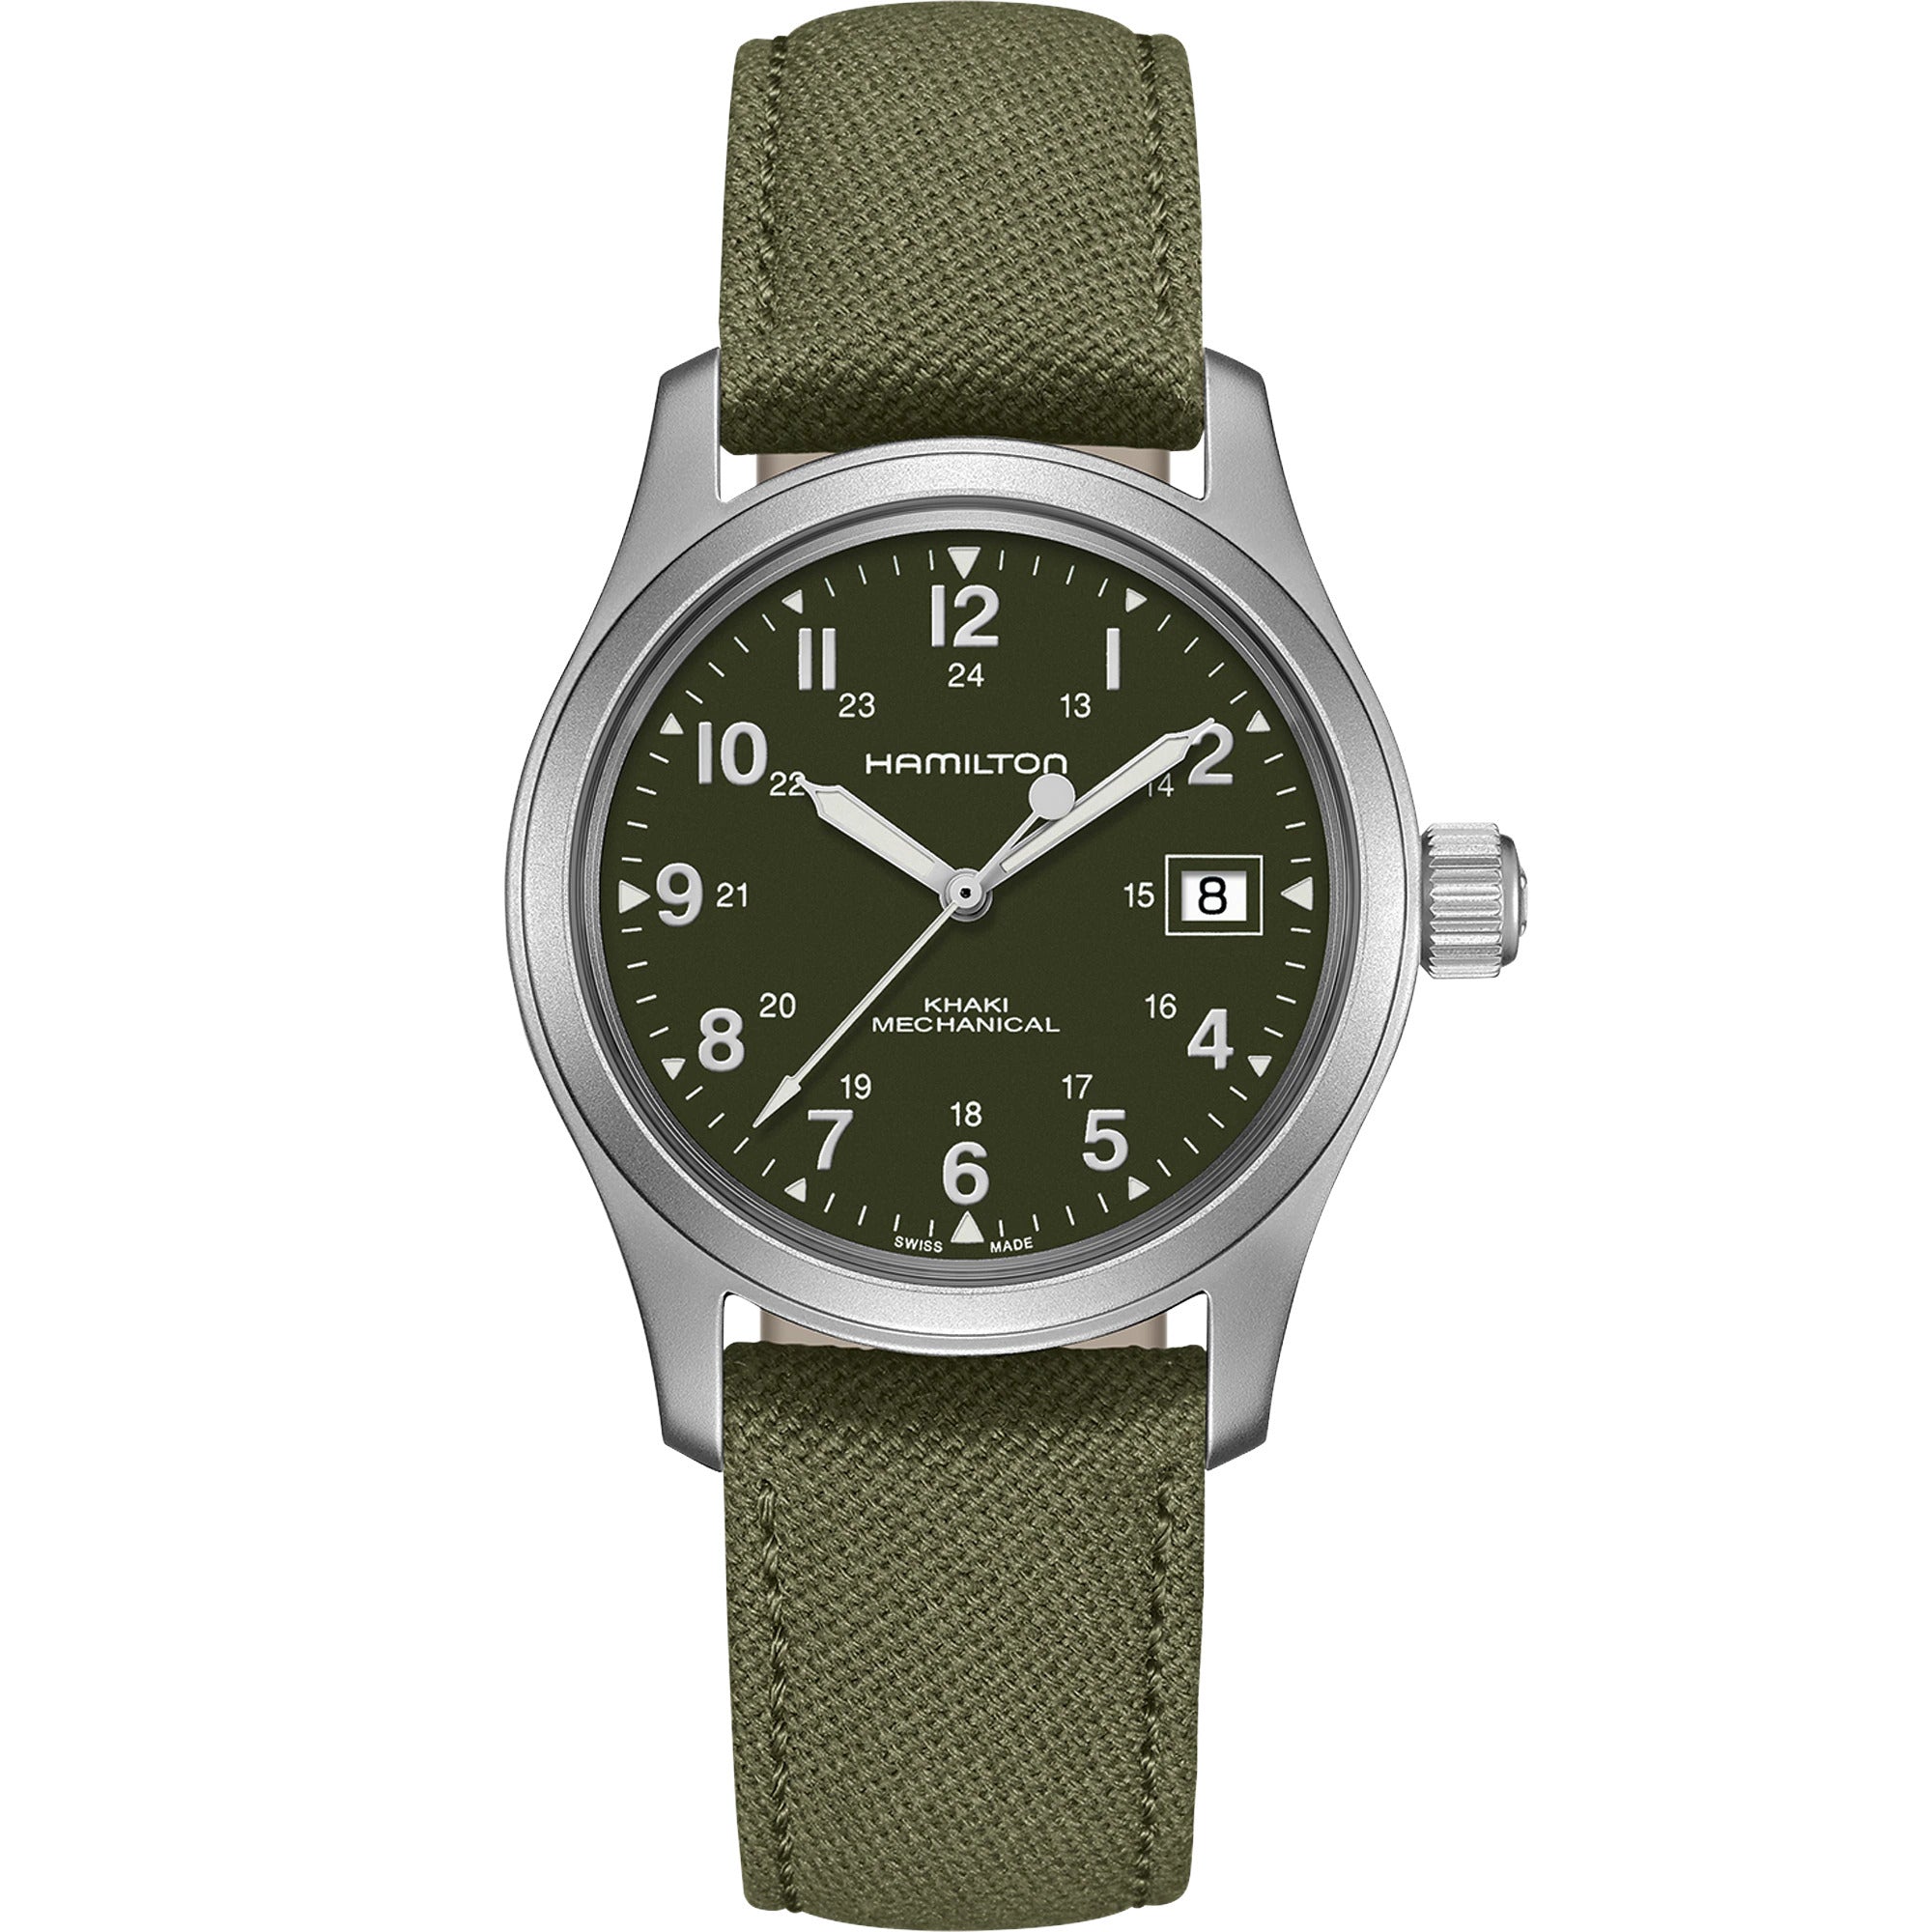 Hamilton Khaki Field Mechanical Men's Watch H69439363